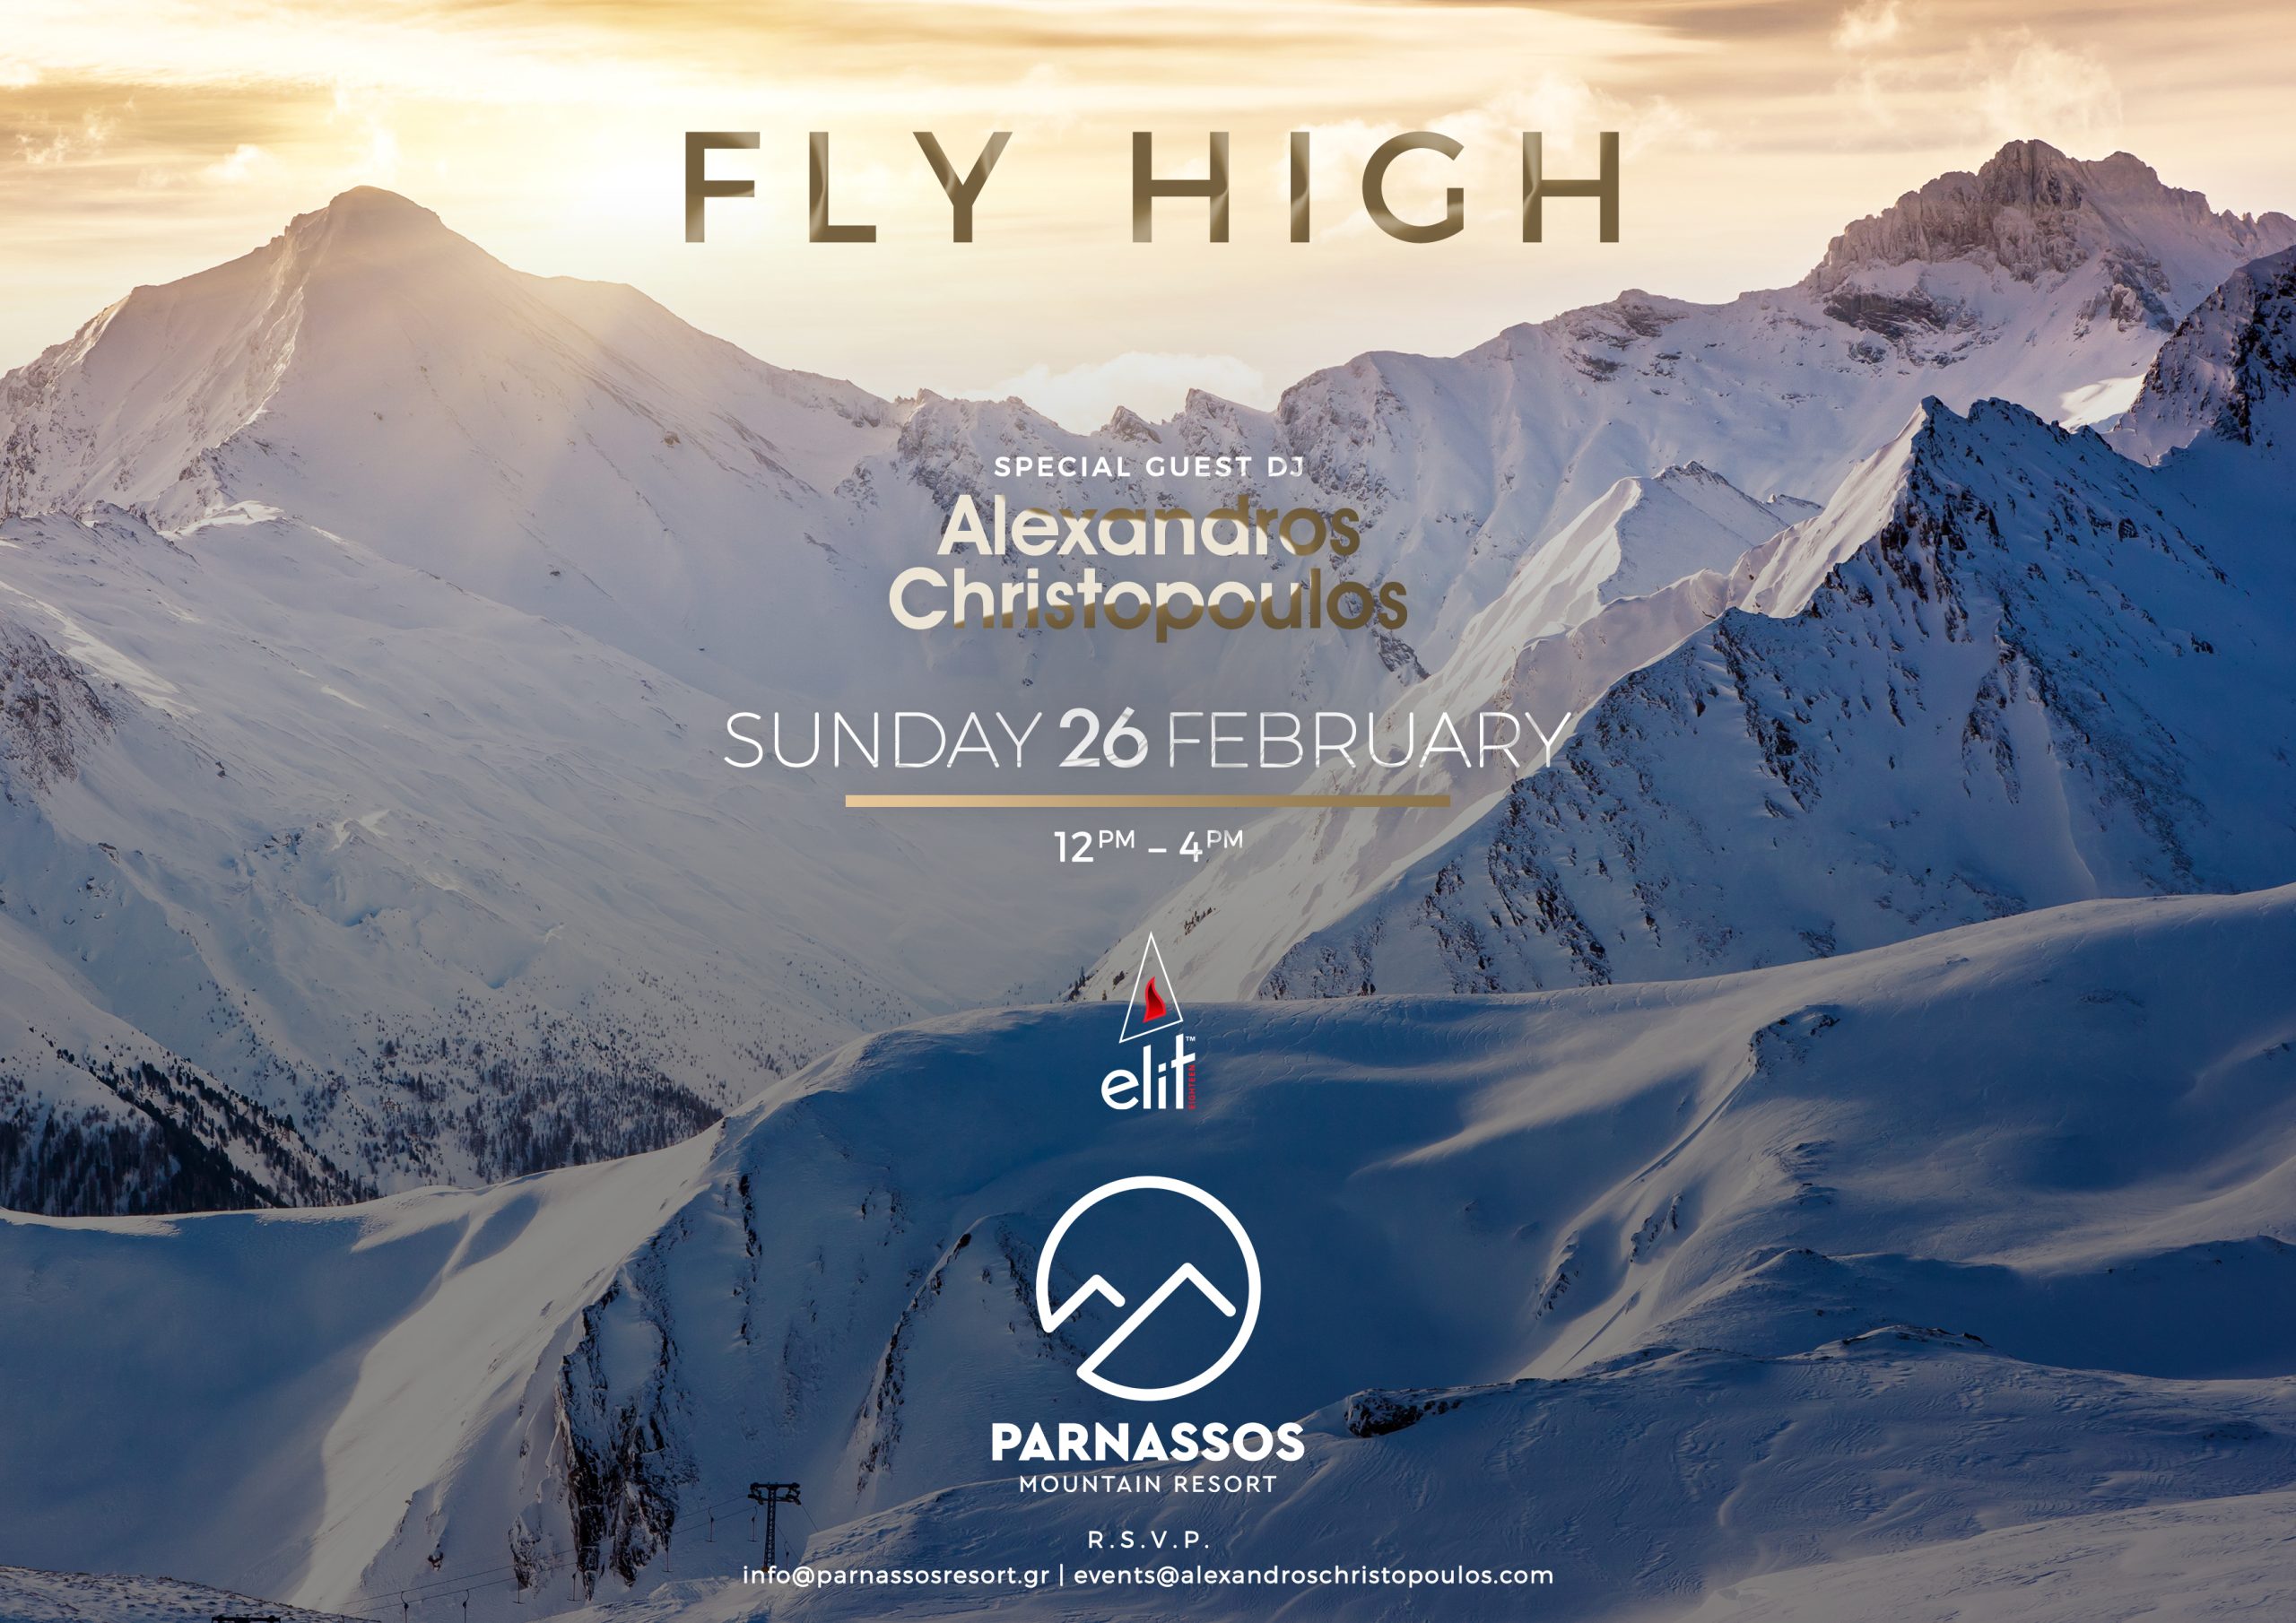 ★ FLY HIGH ★ Parnassos Mountain Resort